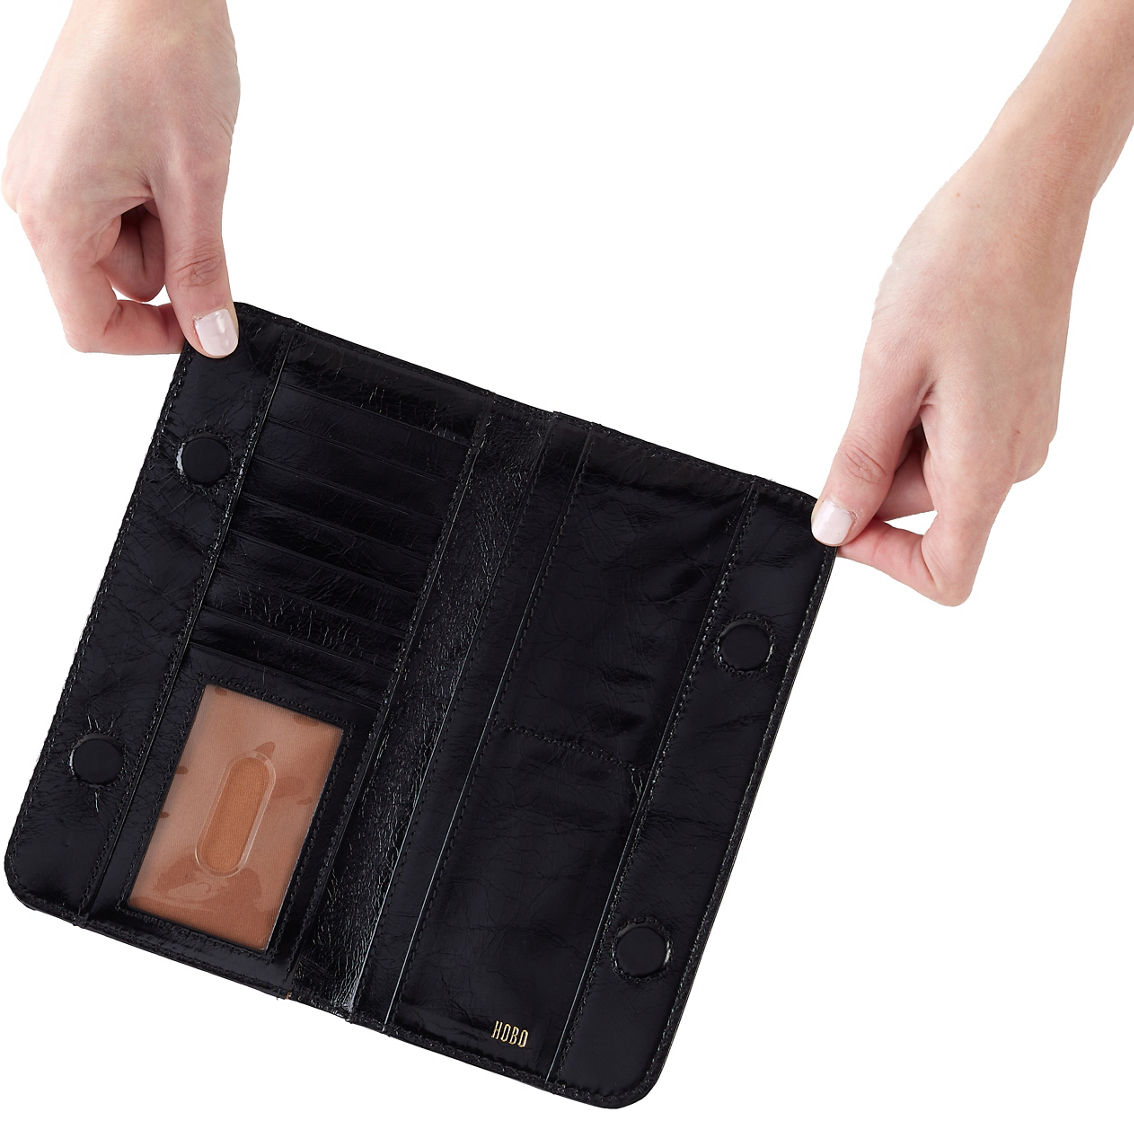 HOBO Angle Large Wallet, Black - Image 3 of 3